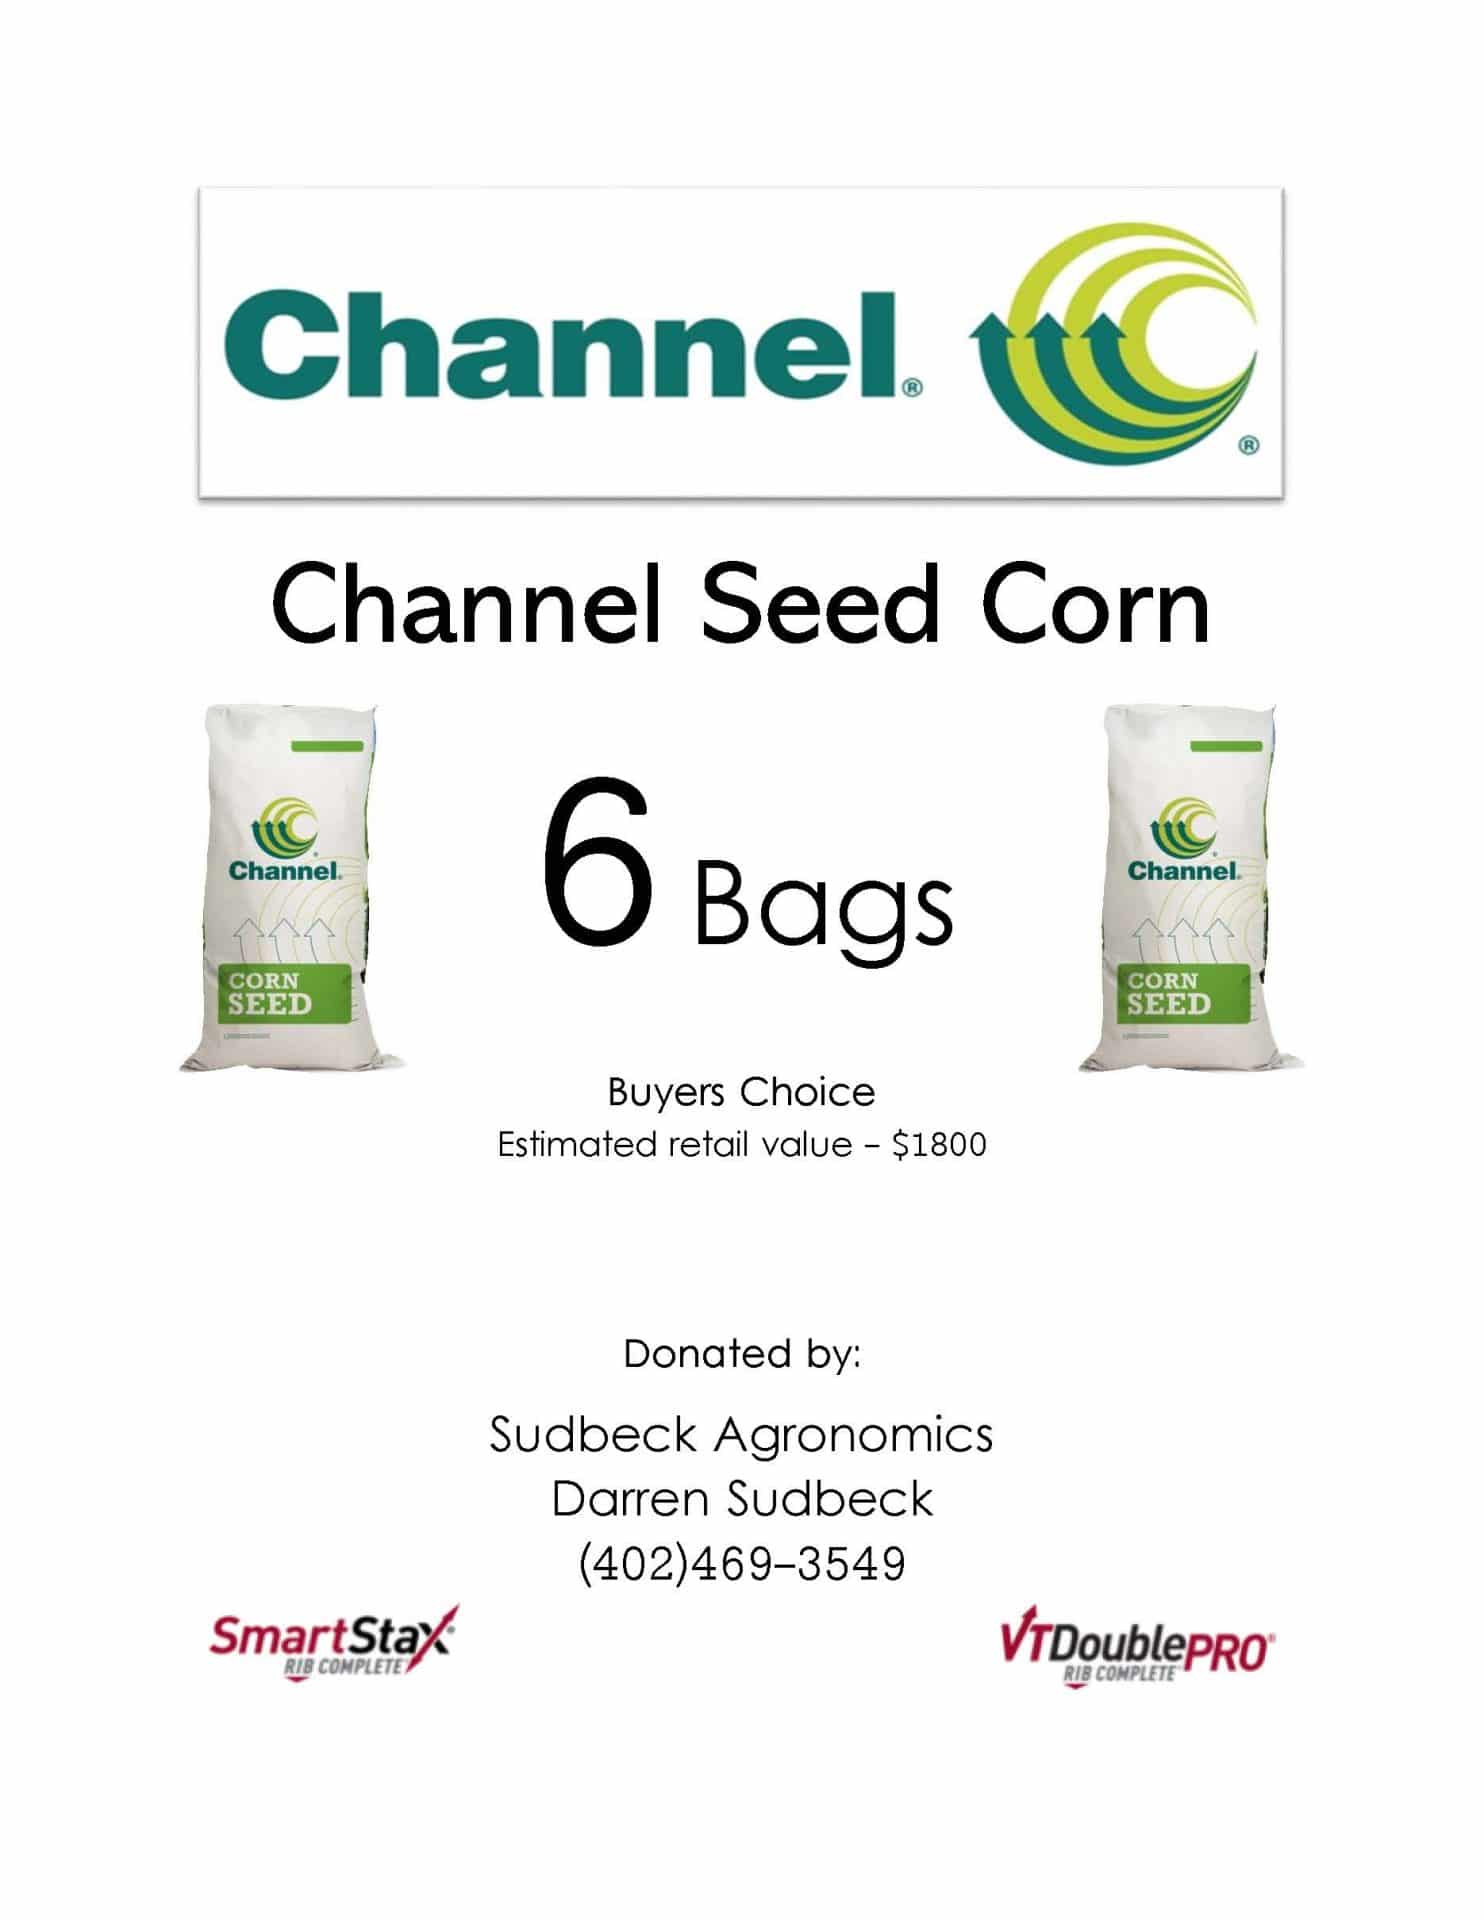 #6 Channel Seed Corn